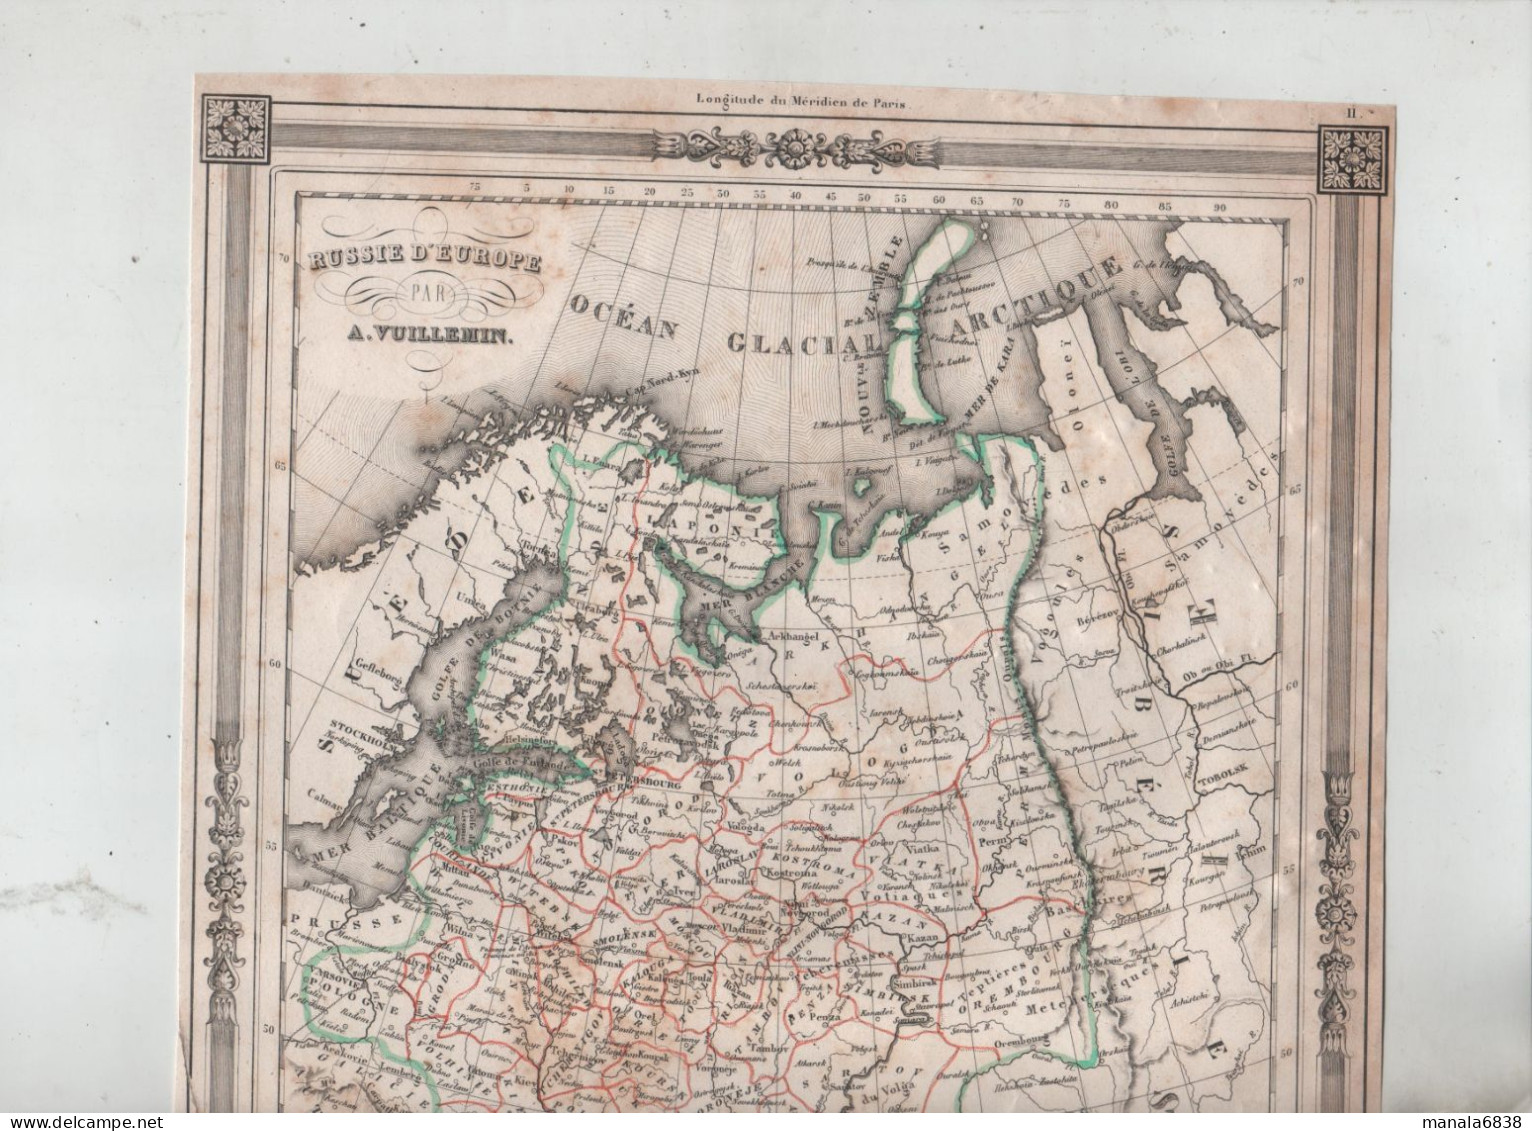 Russie D'Europe Vuillemin 1846 Crimée Mer Caspienne Noire Azol Baltique Blanche - Landkarten